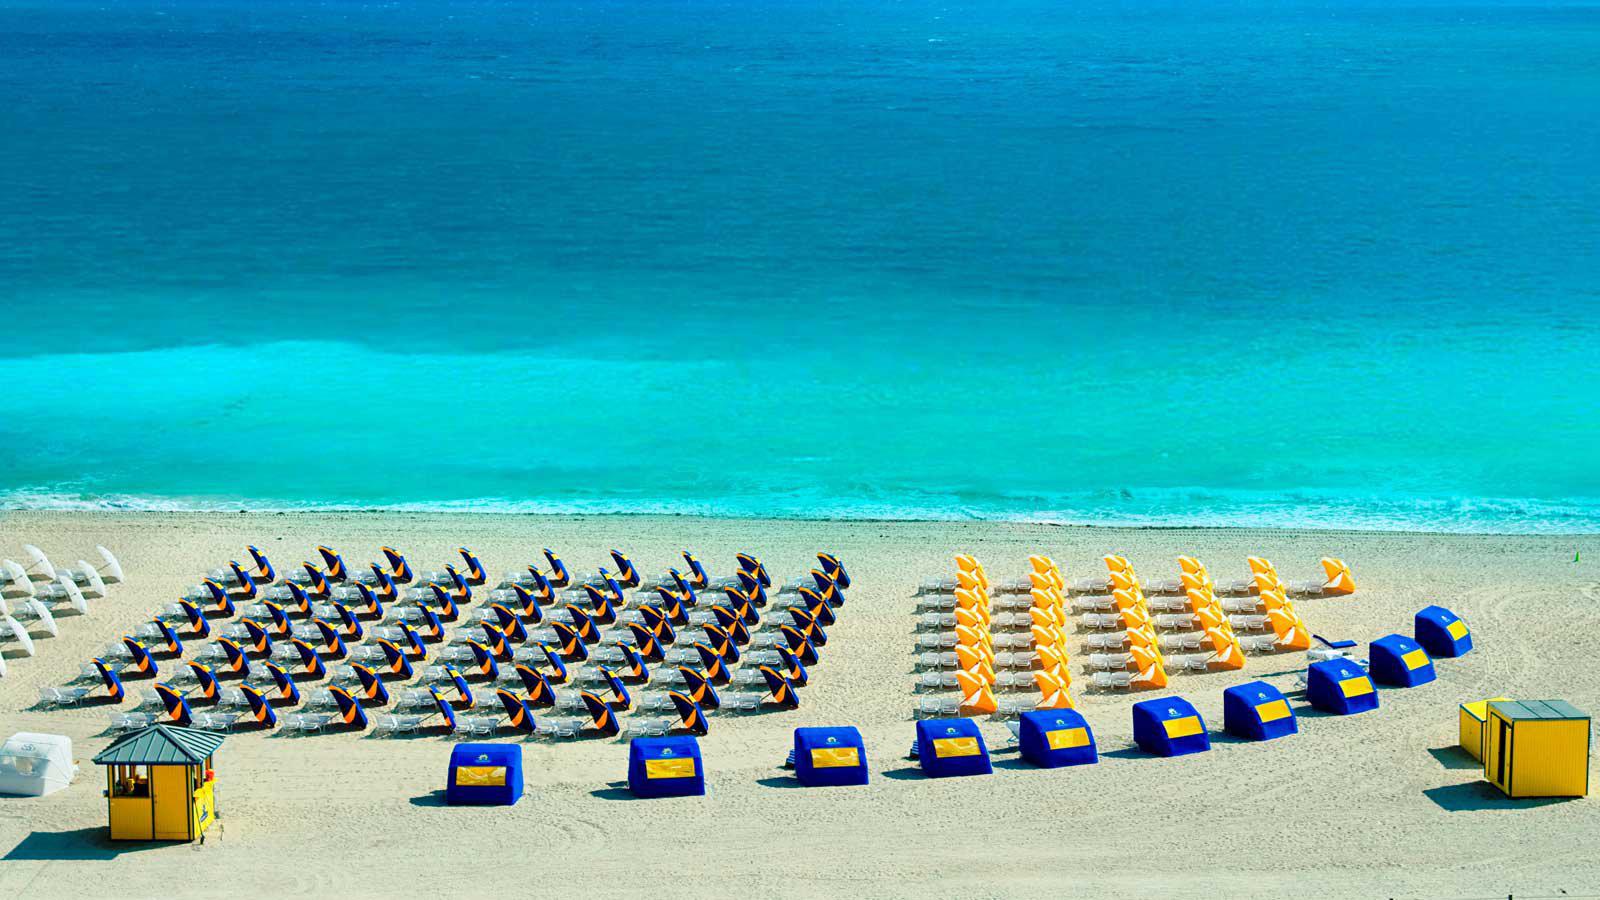 Bentley Beach Club Miami - Plage privée Miami (33139 Miami Beach)